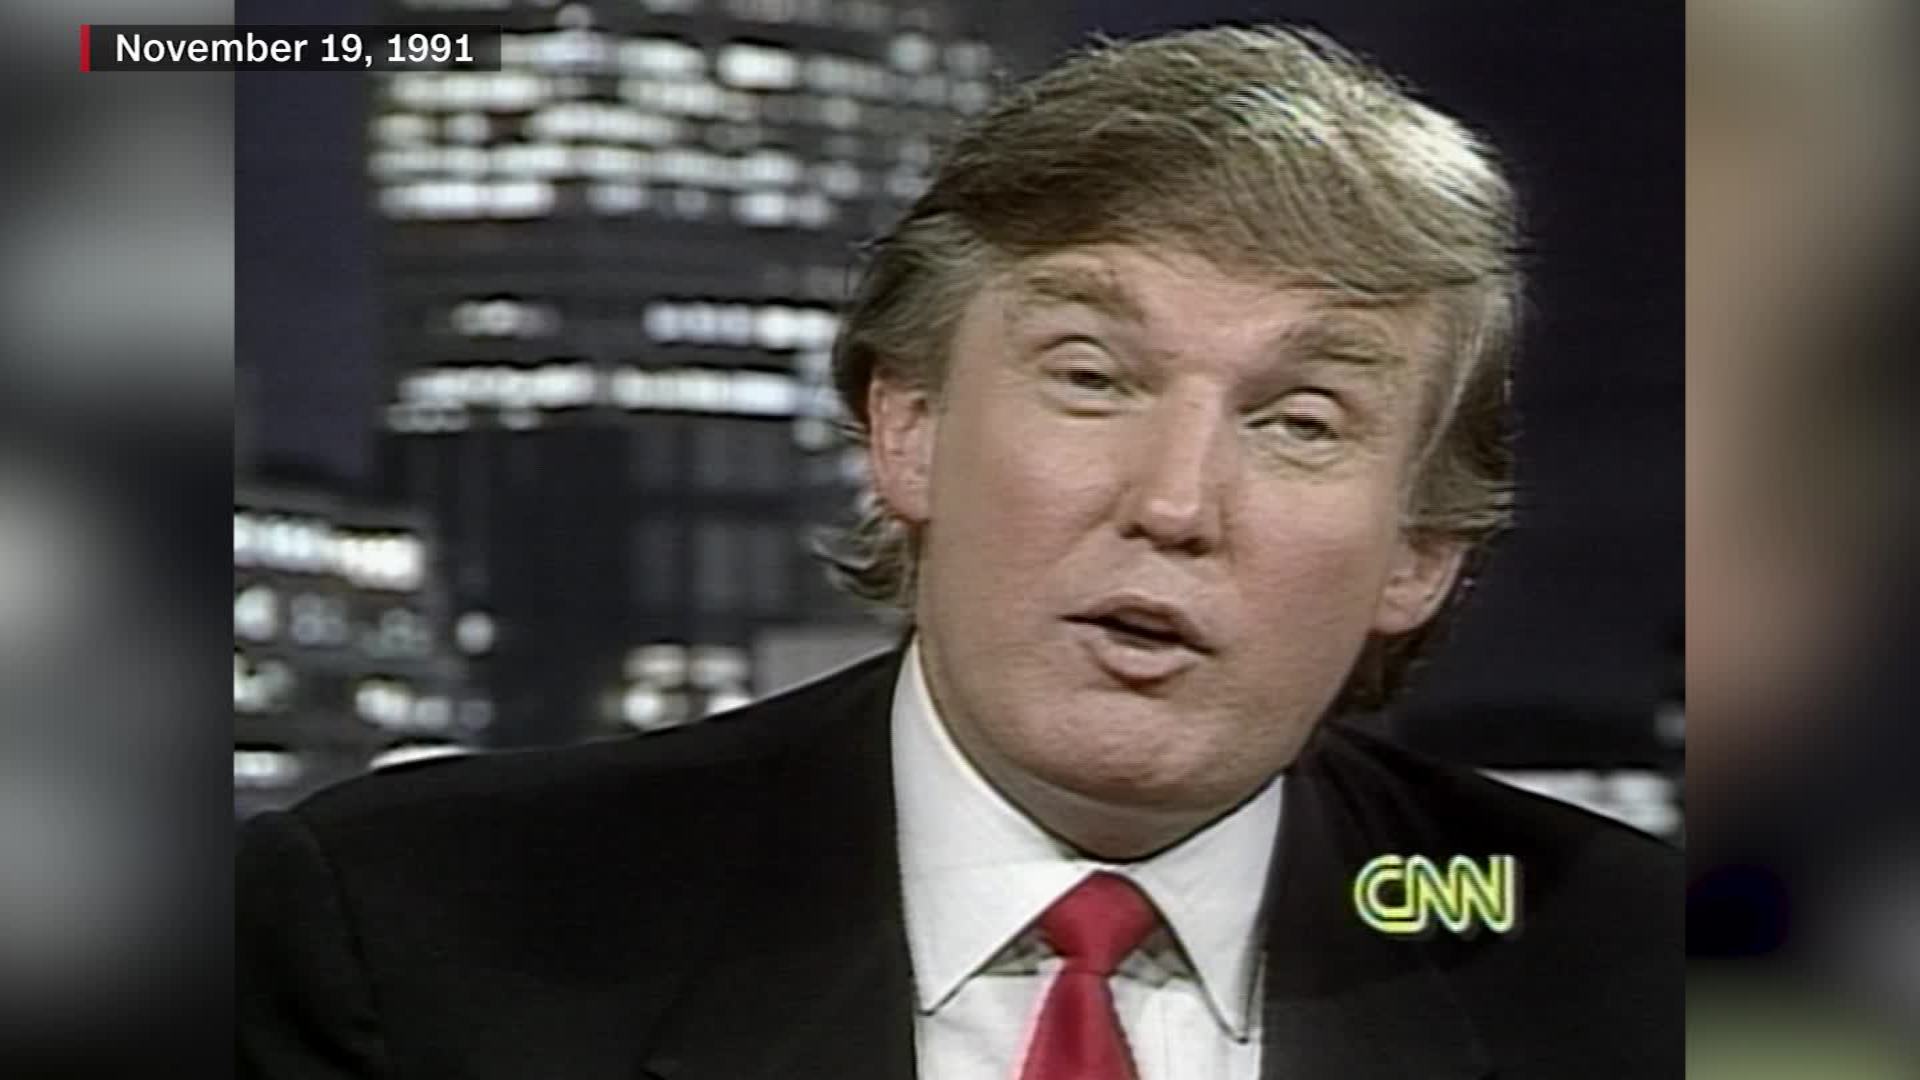 1991: Larry King asks Donald Trump about David Duke - CNN Video